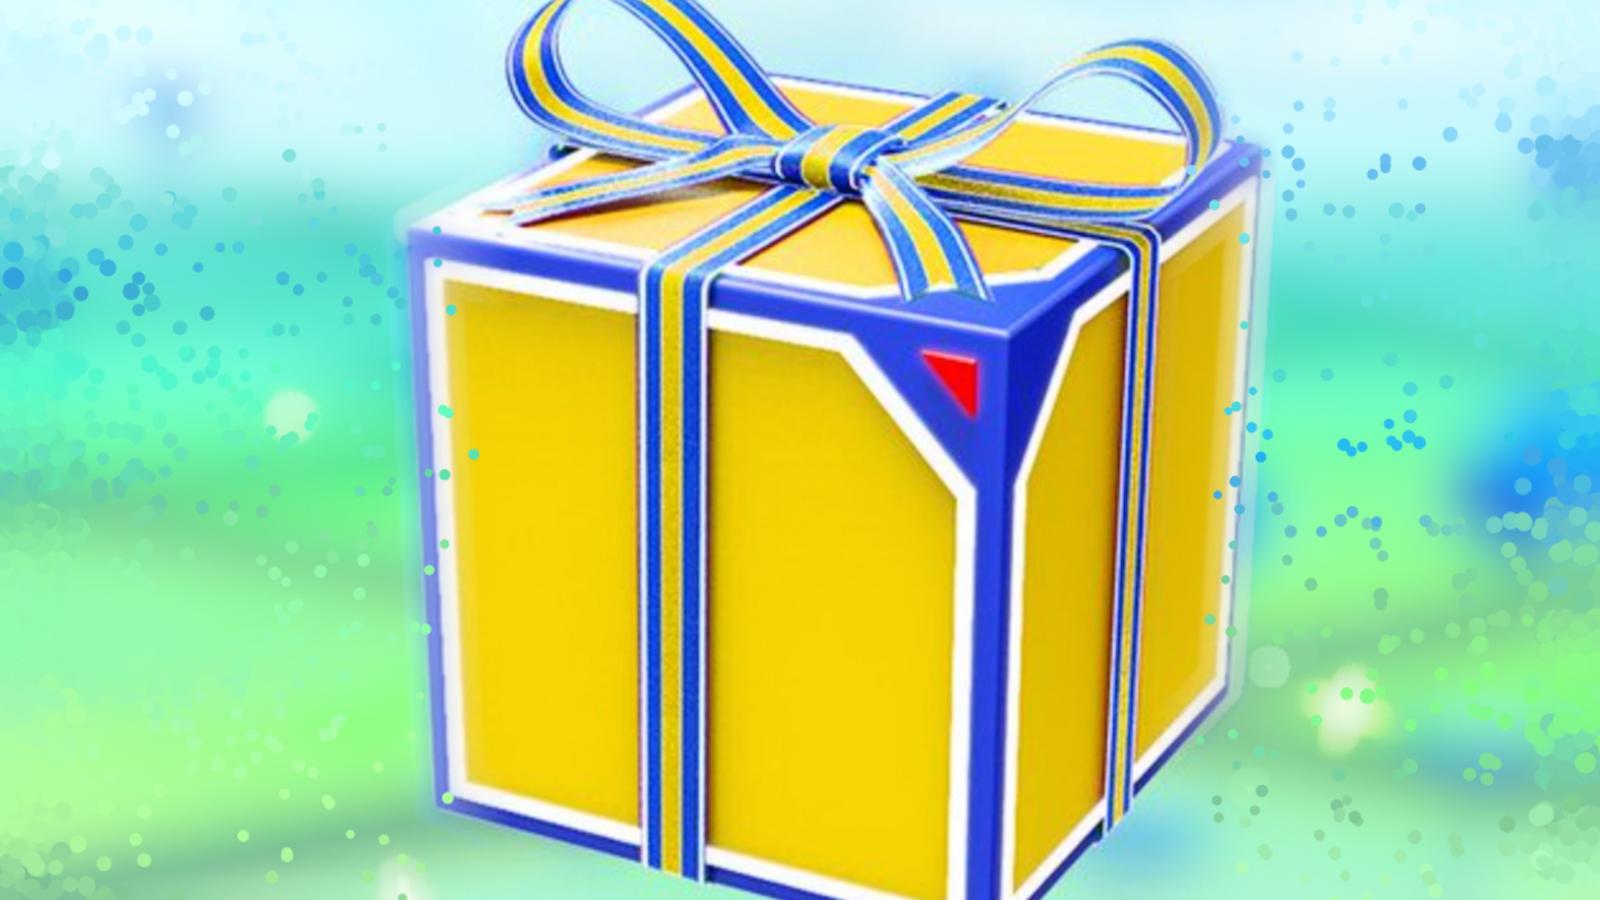 Bundle Box from Pokemon Go